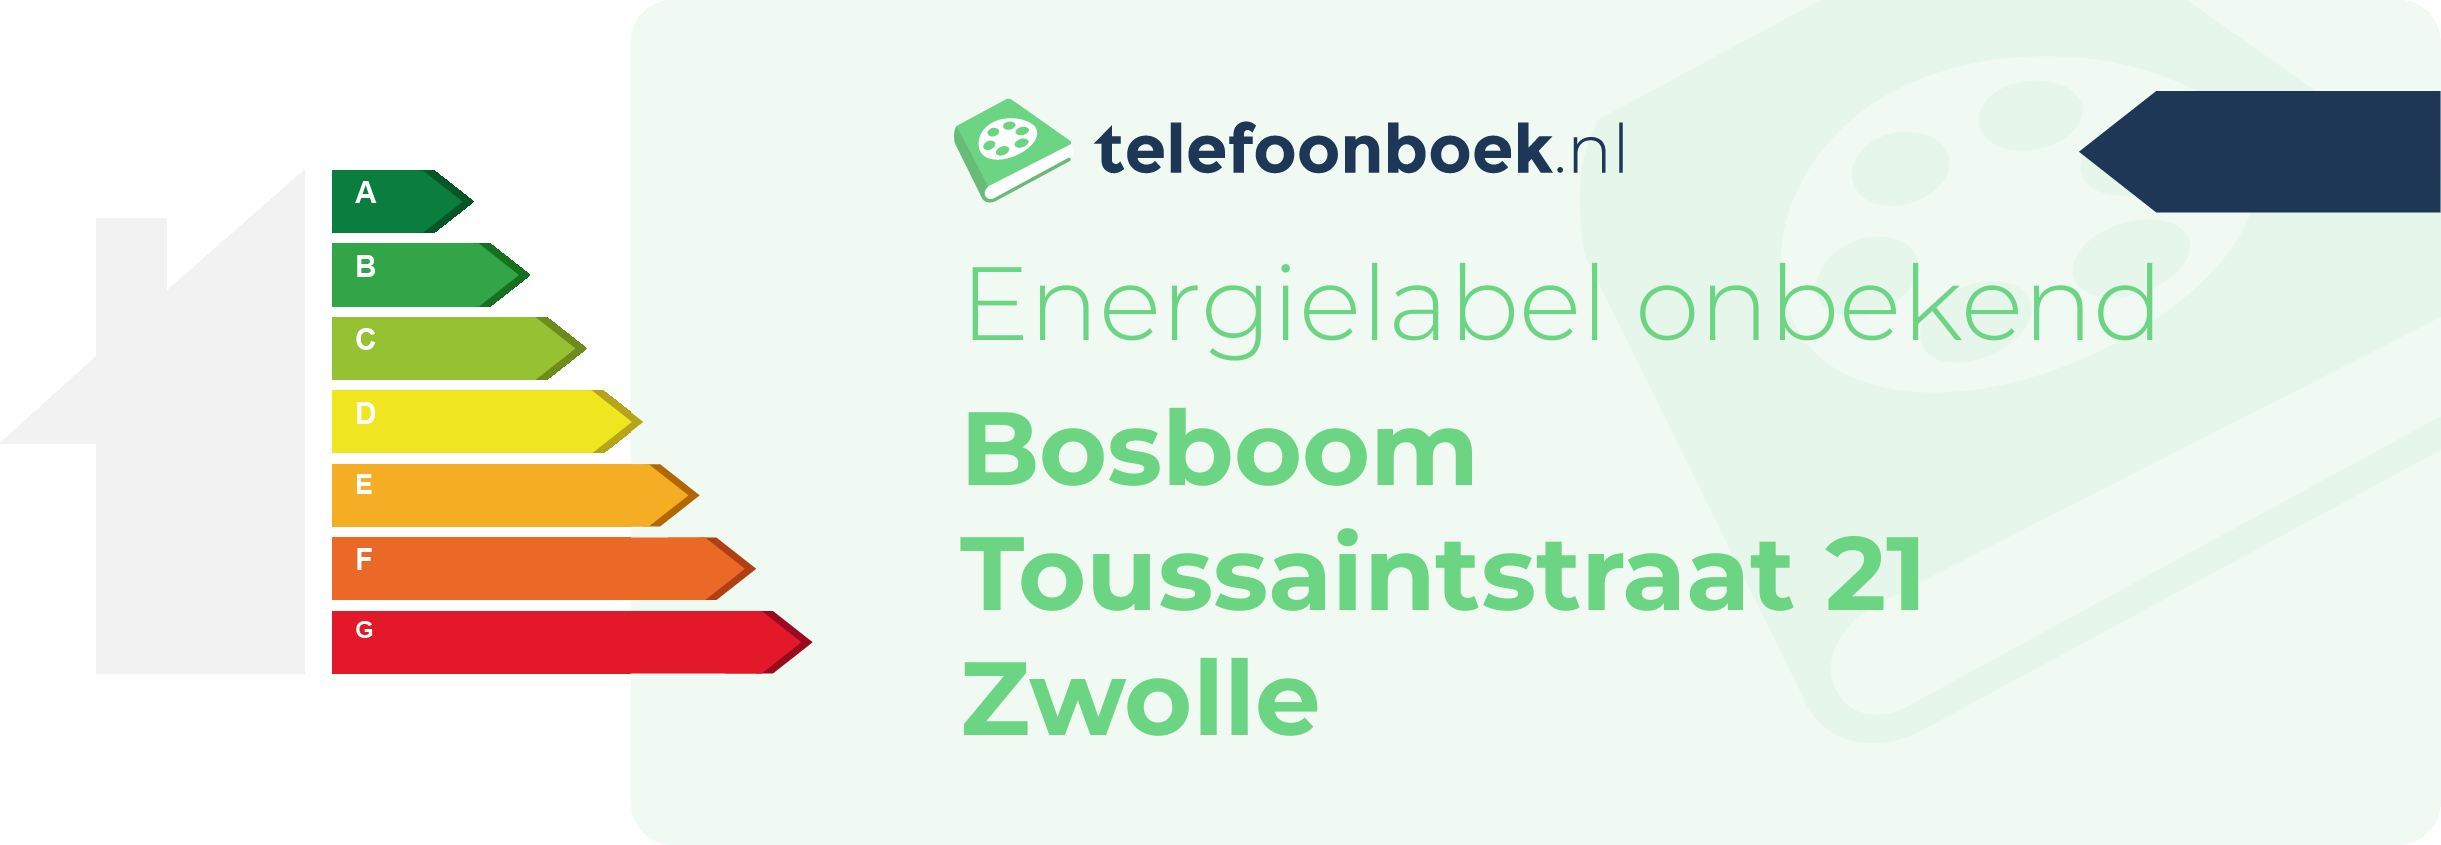 Energielabel Bosboom Toussaintstraat 21 Zwolle